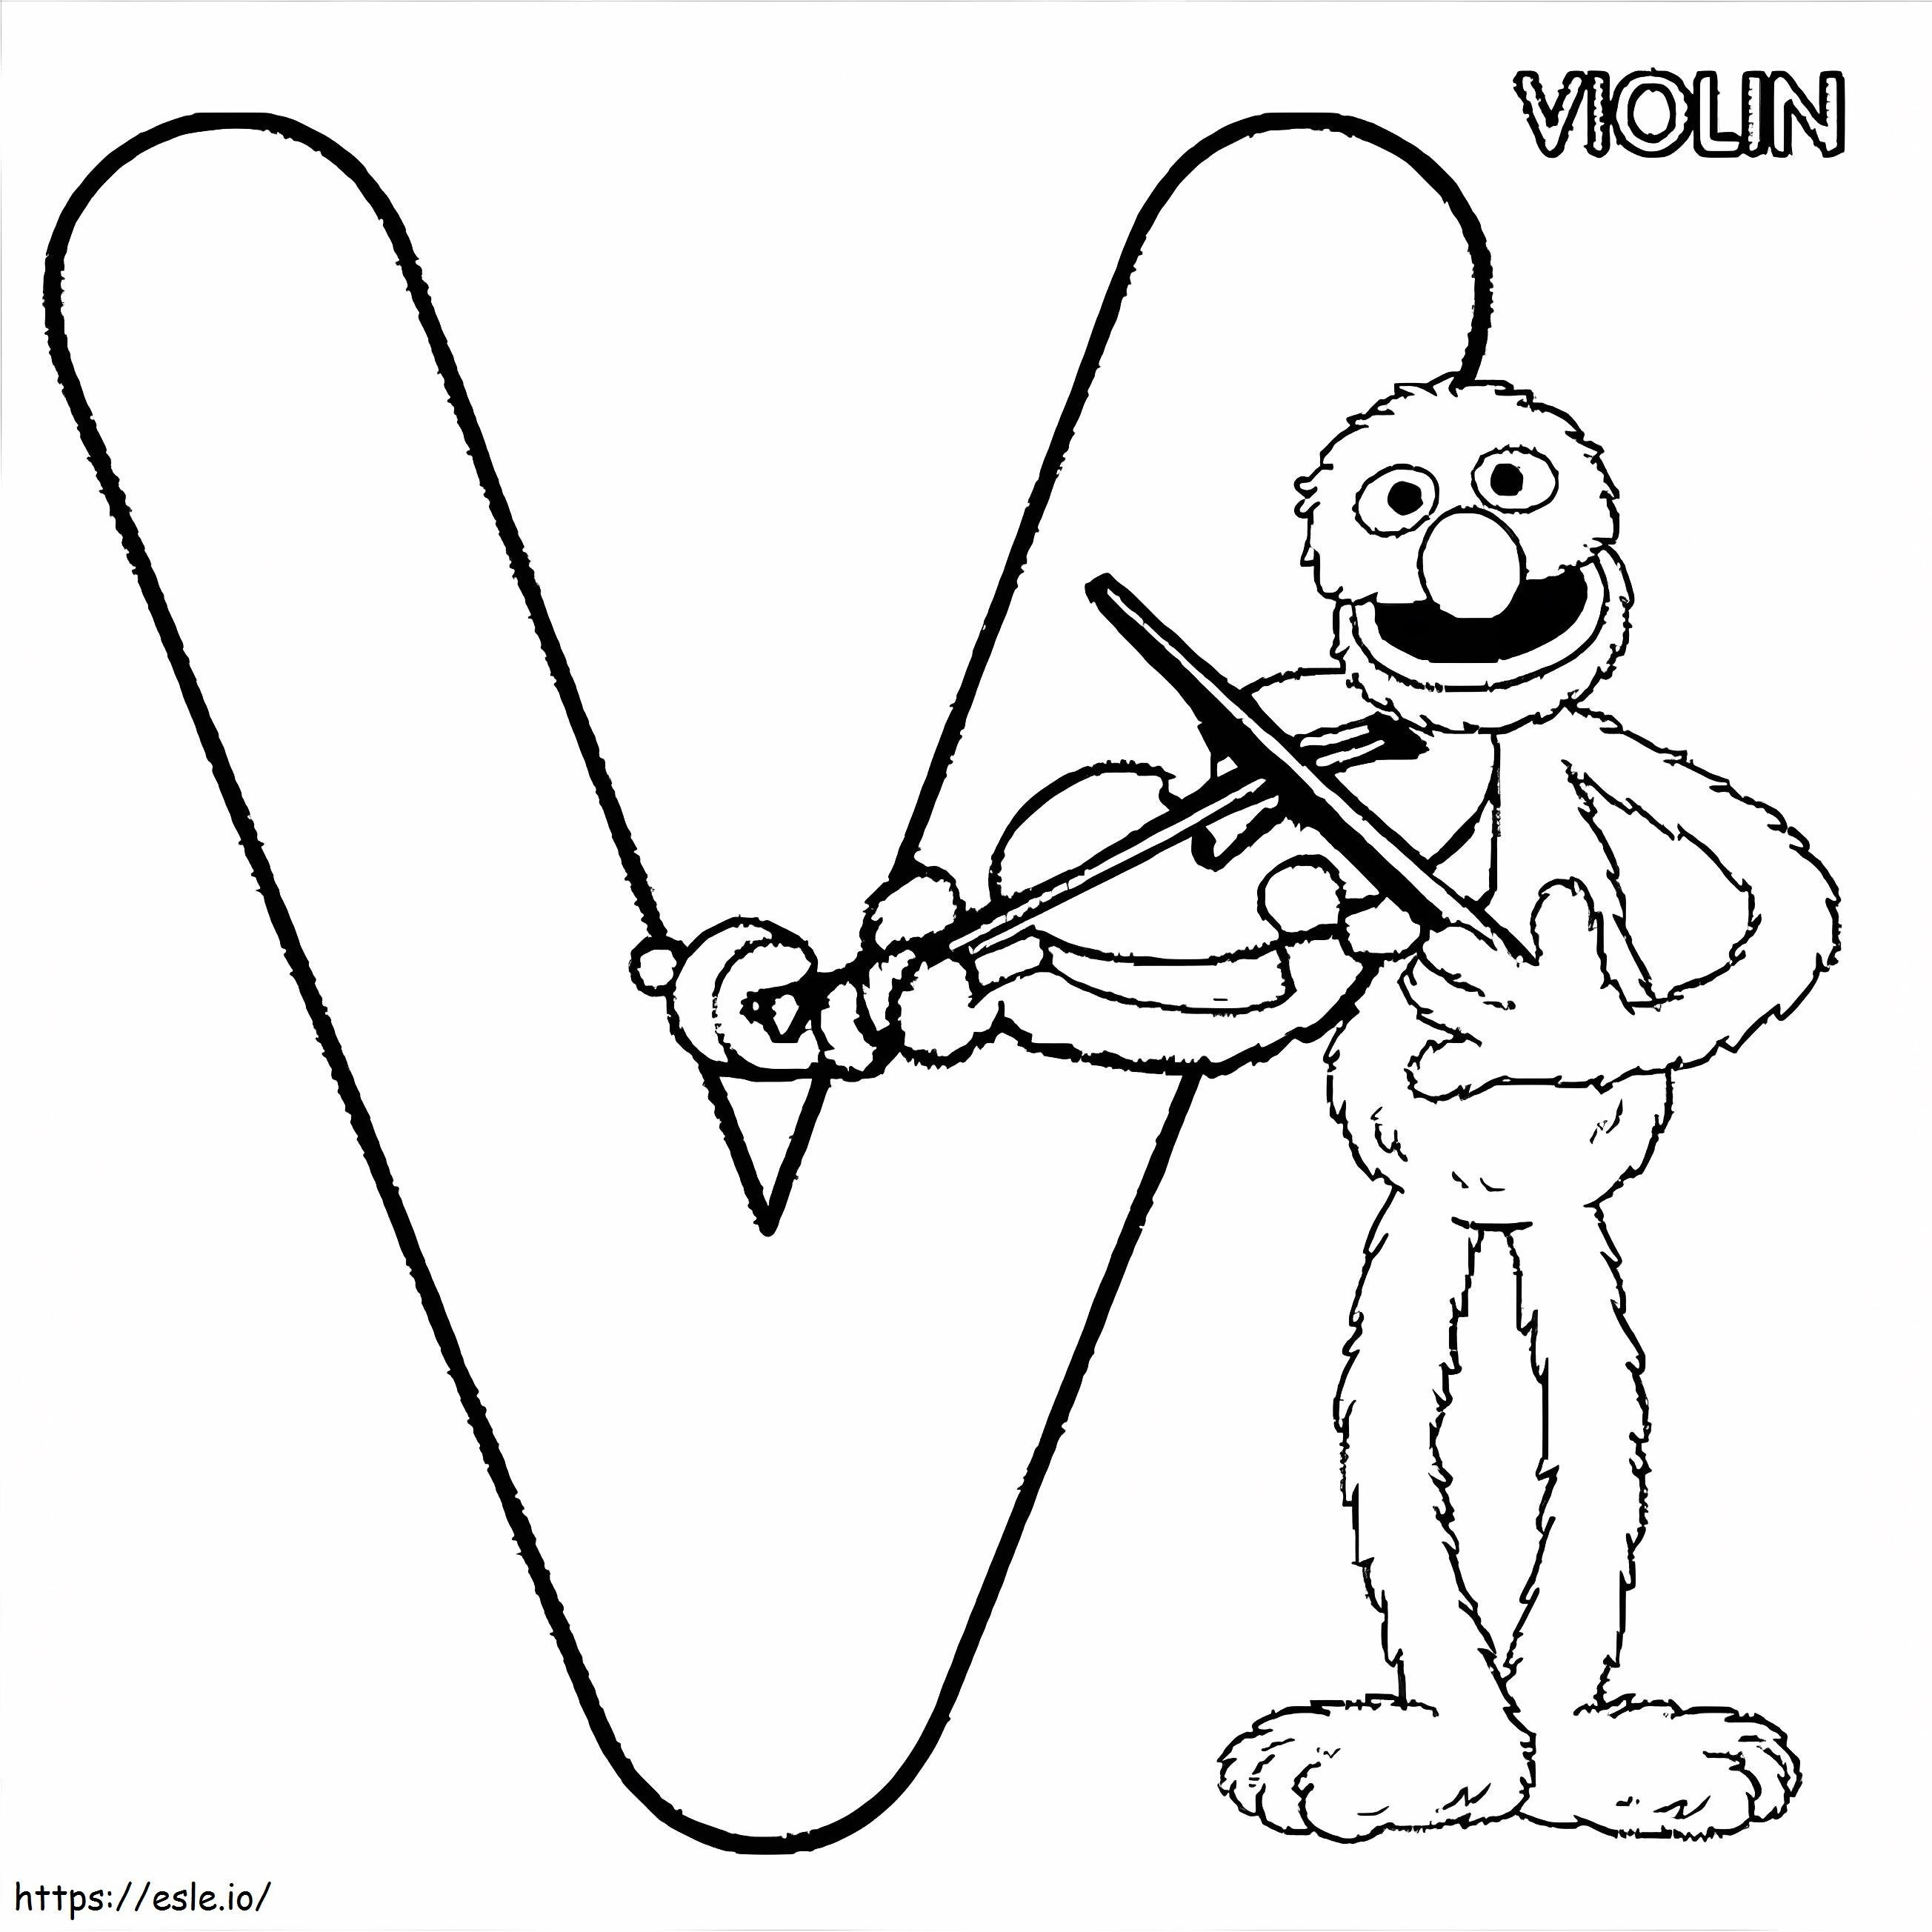 Grover V für Violine ausmalbilder